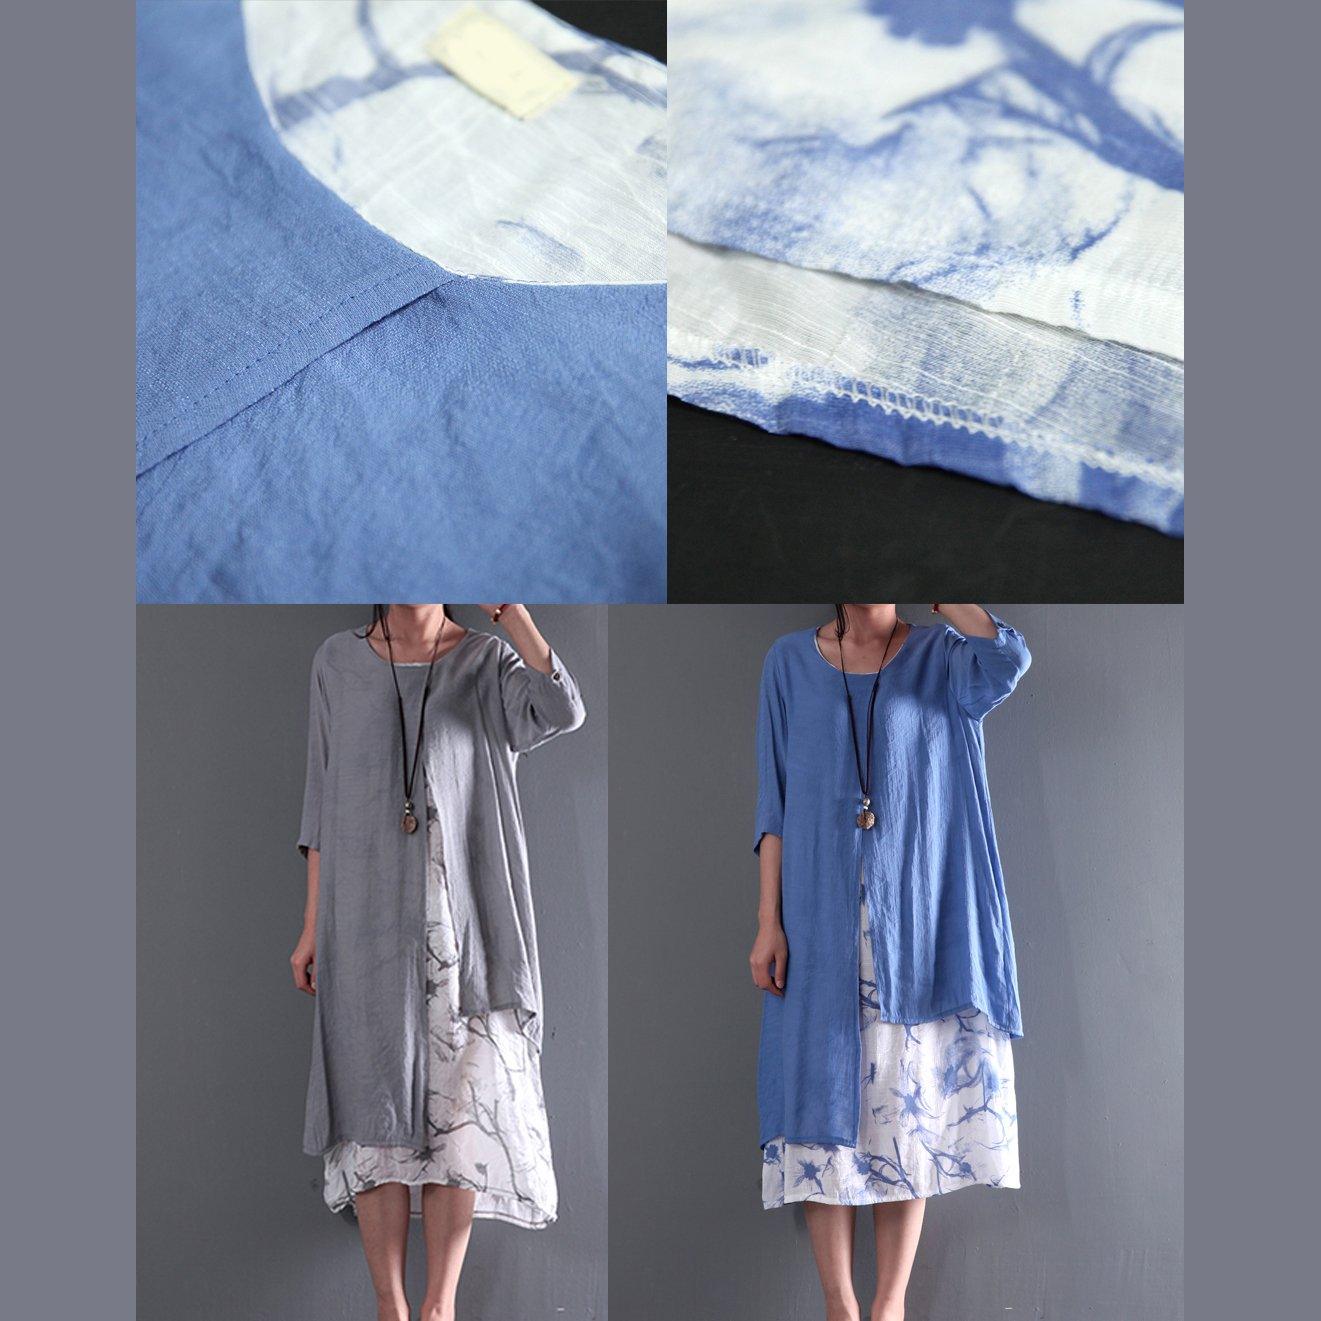 Blue asymmetrical summer maxi dress layered sundress plus size clothing floral inside - Omychic